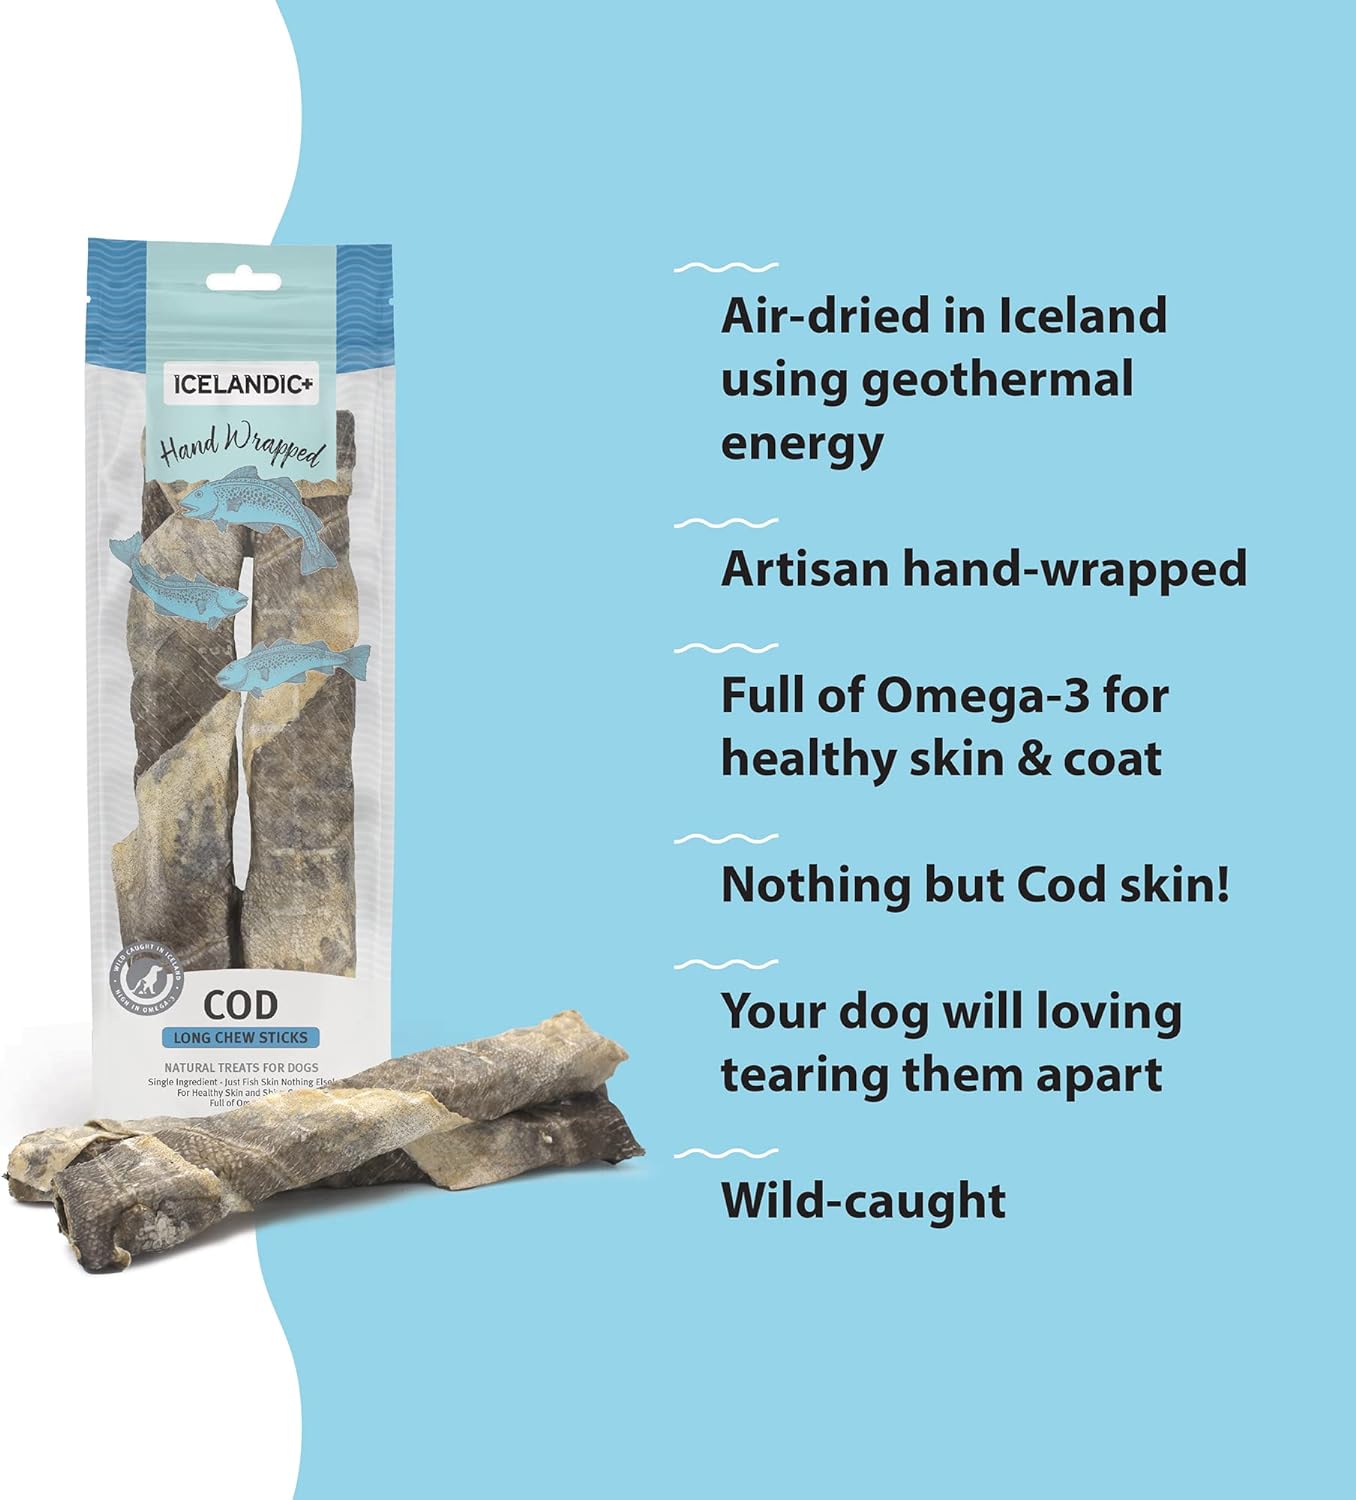 Icelandic+ Cod Skin 10" Long Hand Wrapped Dog Chew Stick, 2-Pack, 3.2-oz Bag